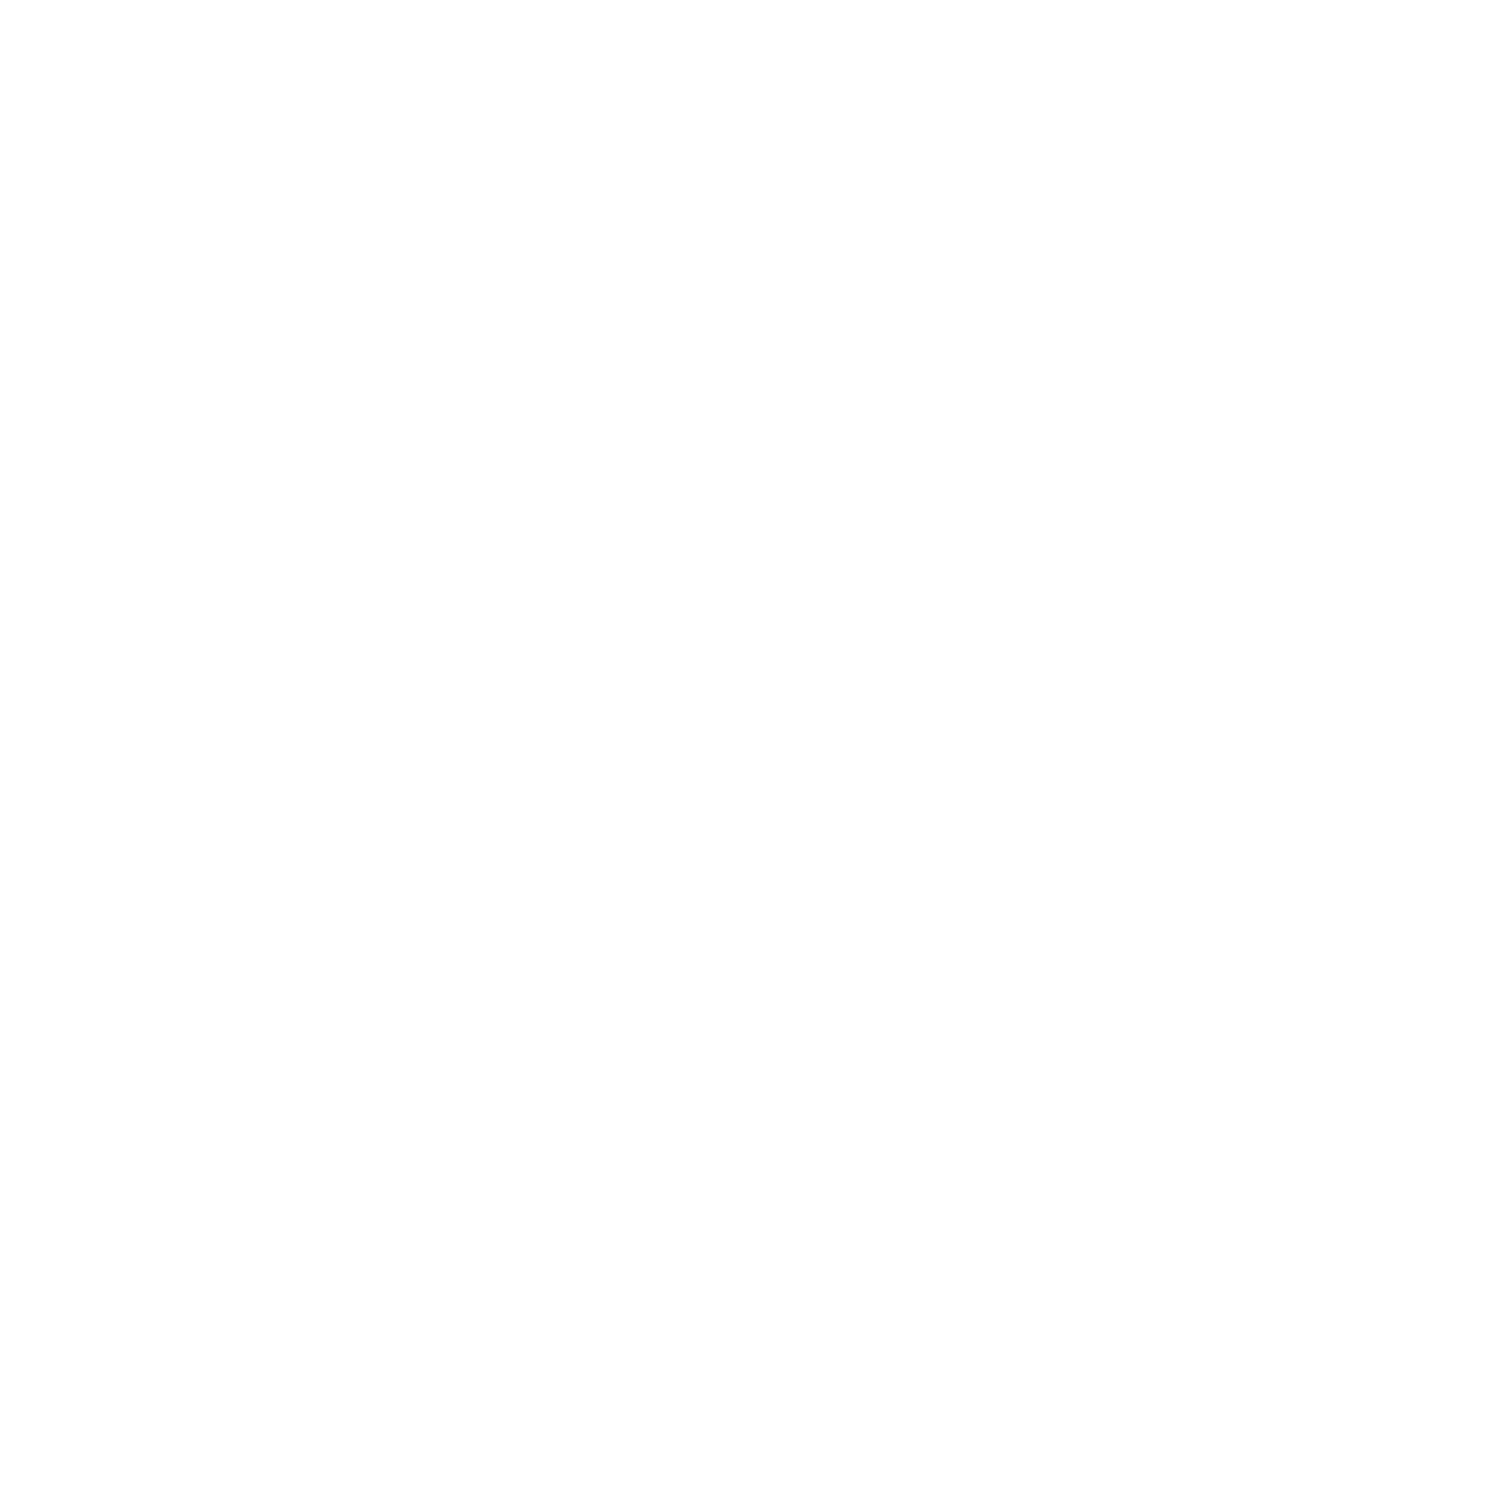 Proaltus Capital Partners